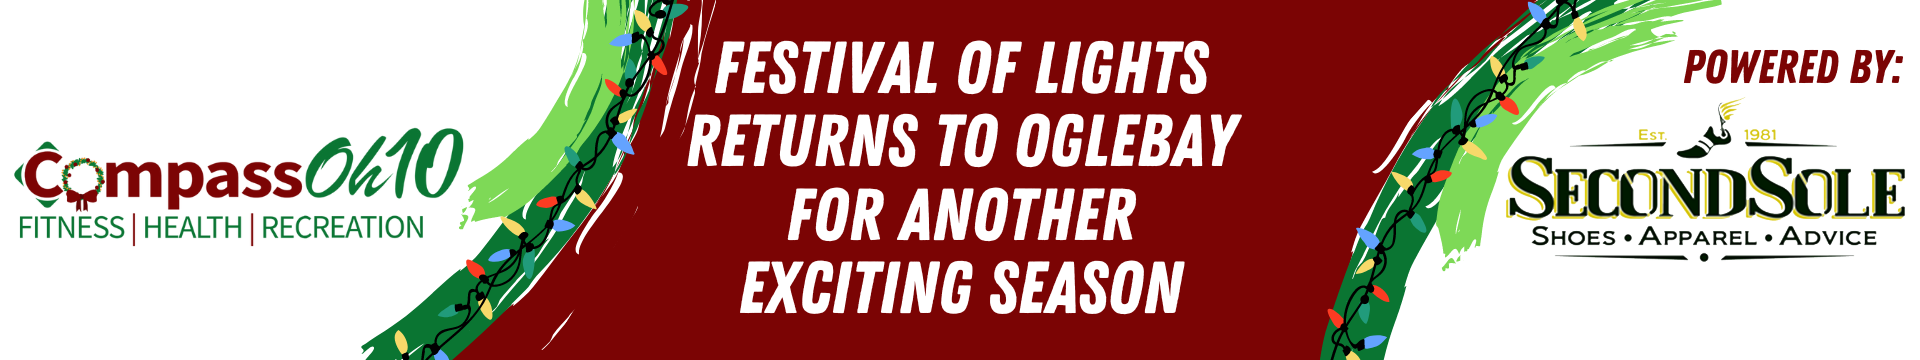 Festival of Lights Returns to Oglebay for Another Exciting Season